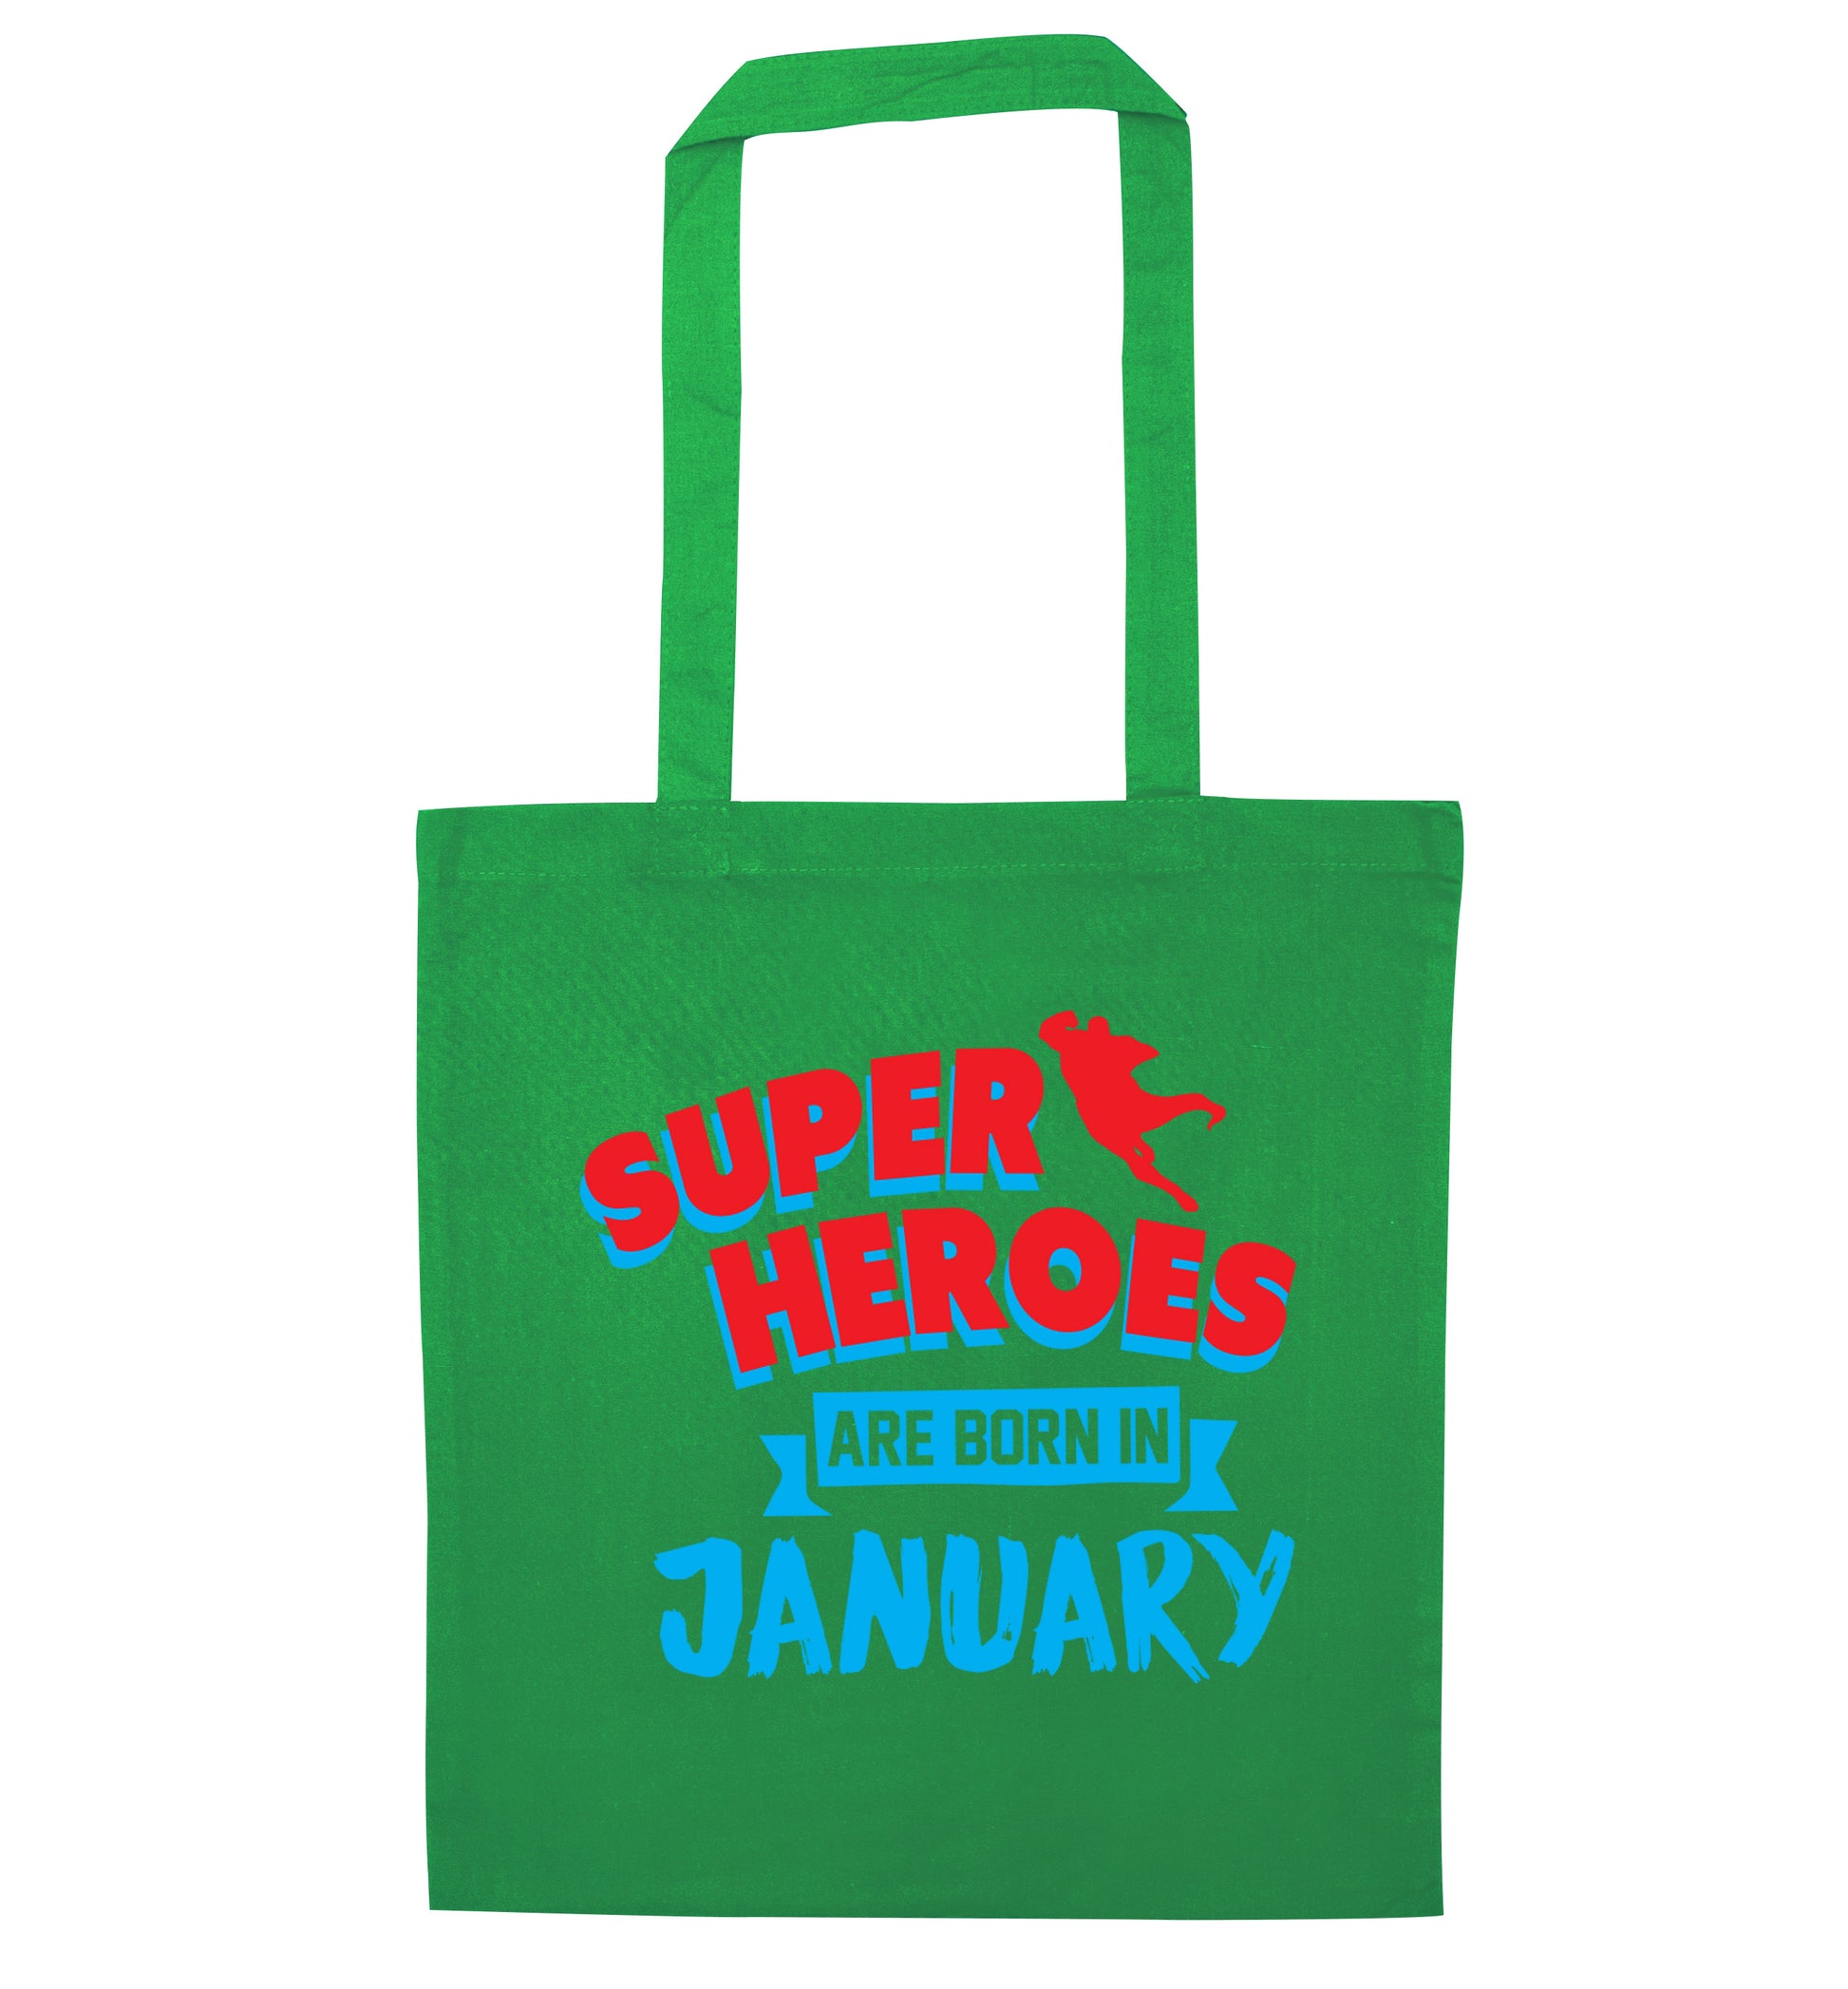 Superheros are born in January green tote bag